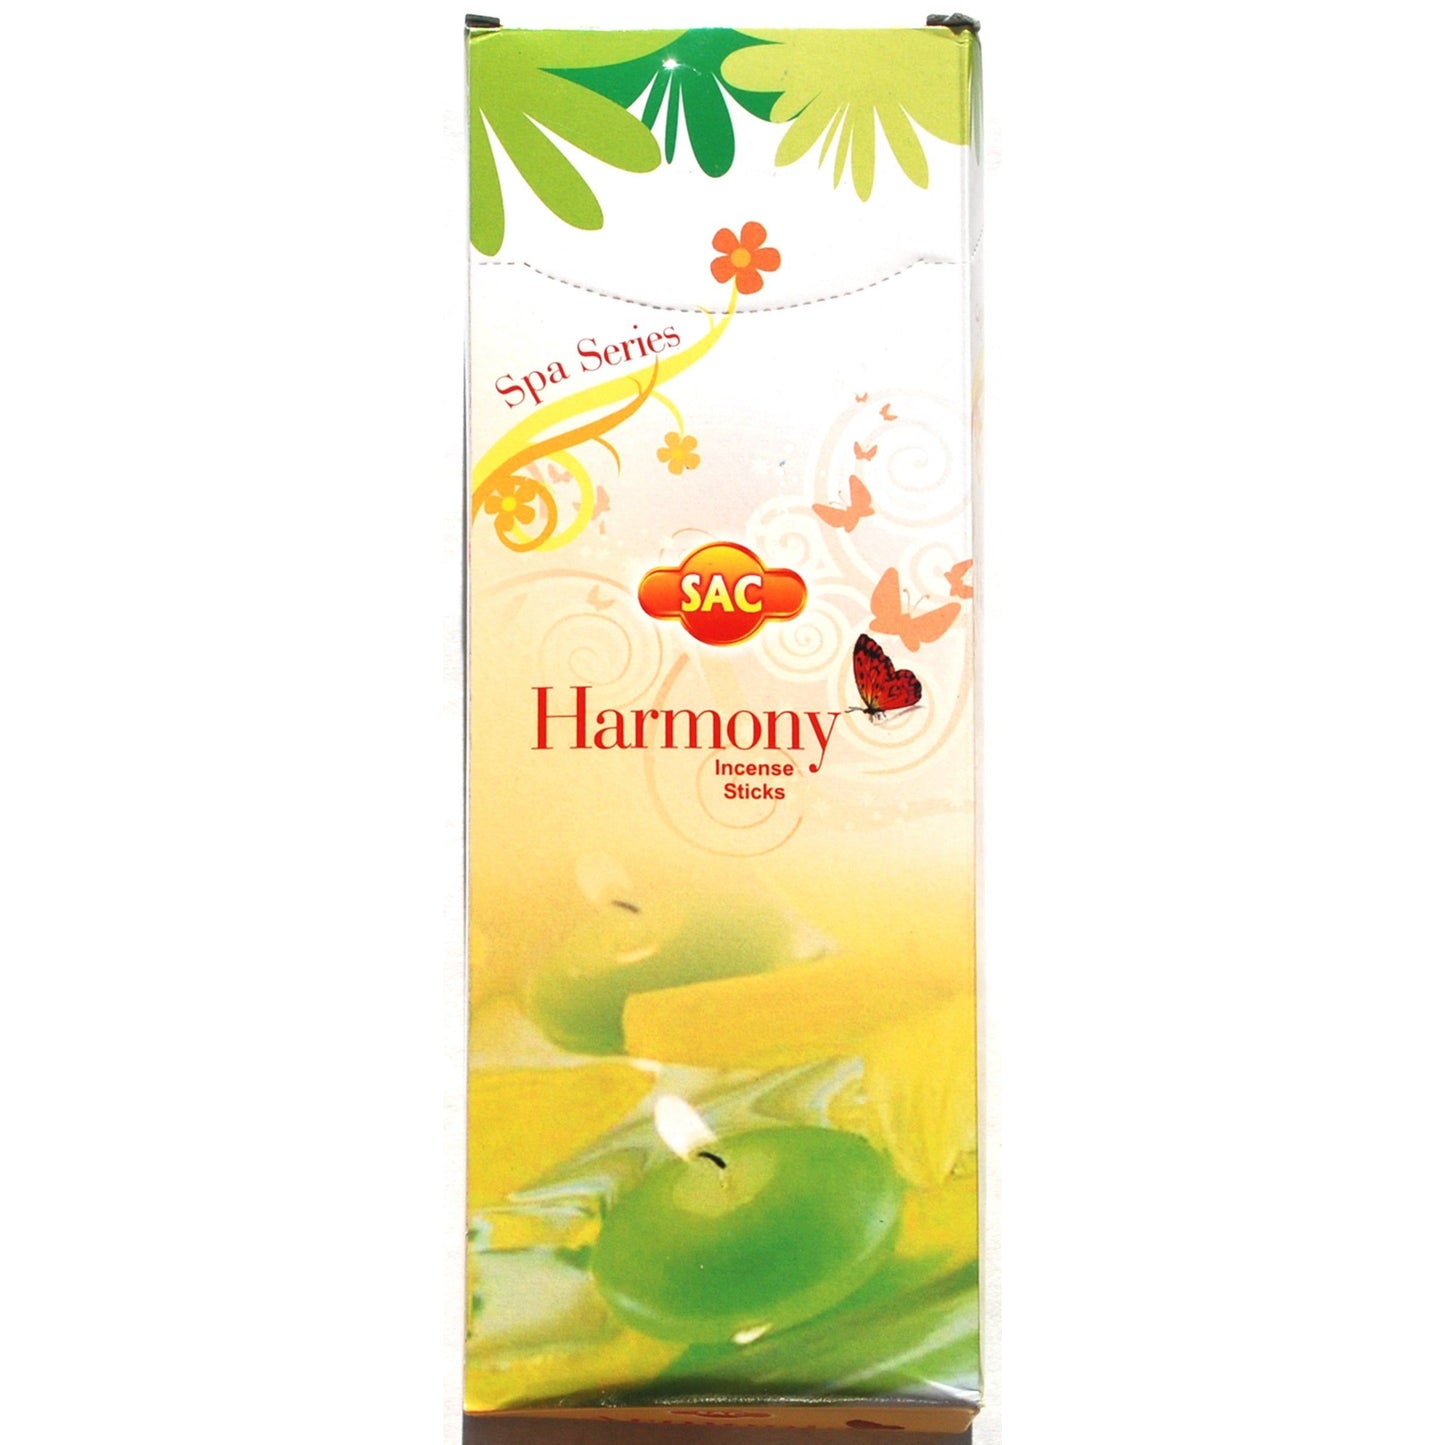 Sandesh - Spa Series, Harmony